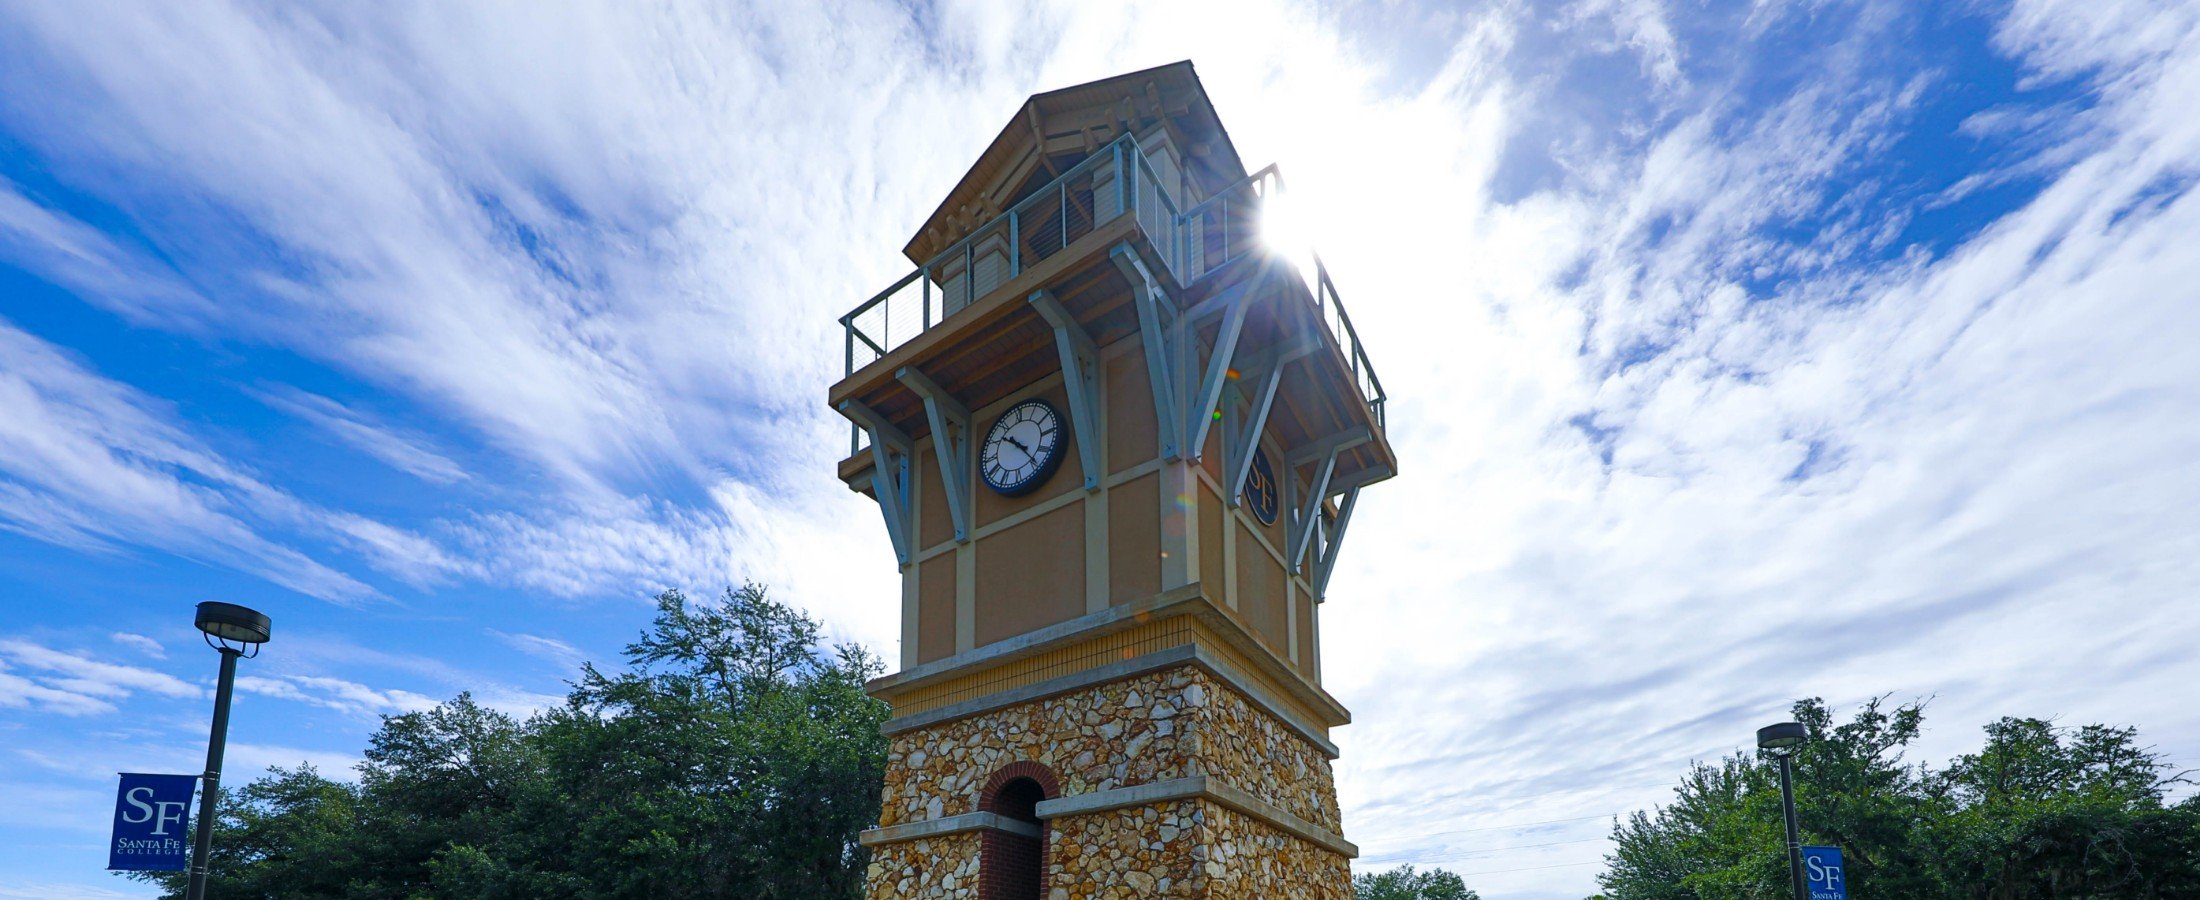 The Santa Fe College clock tower